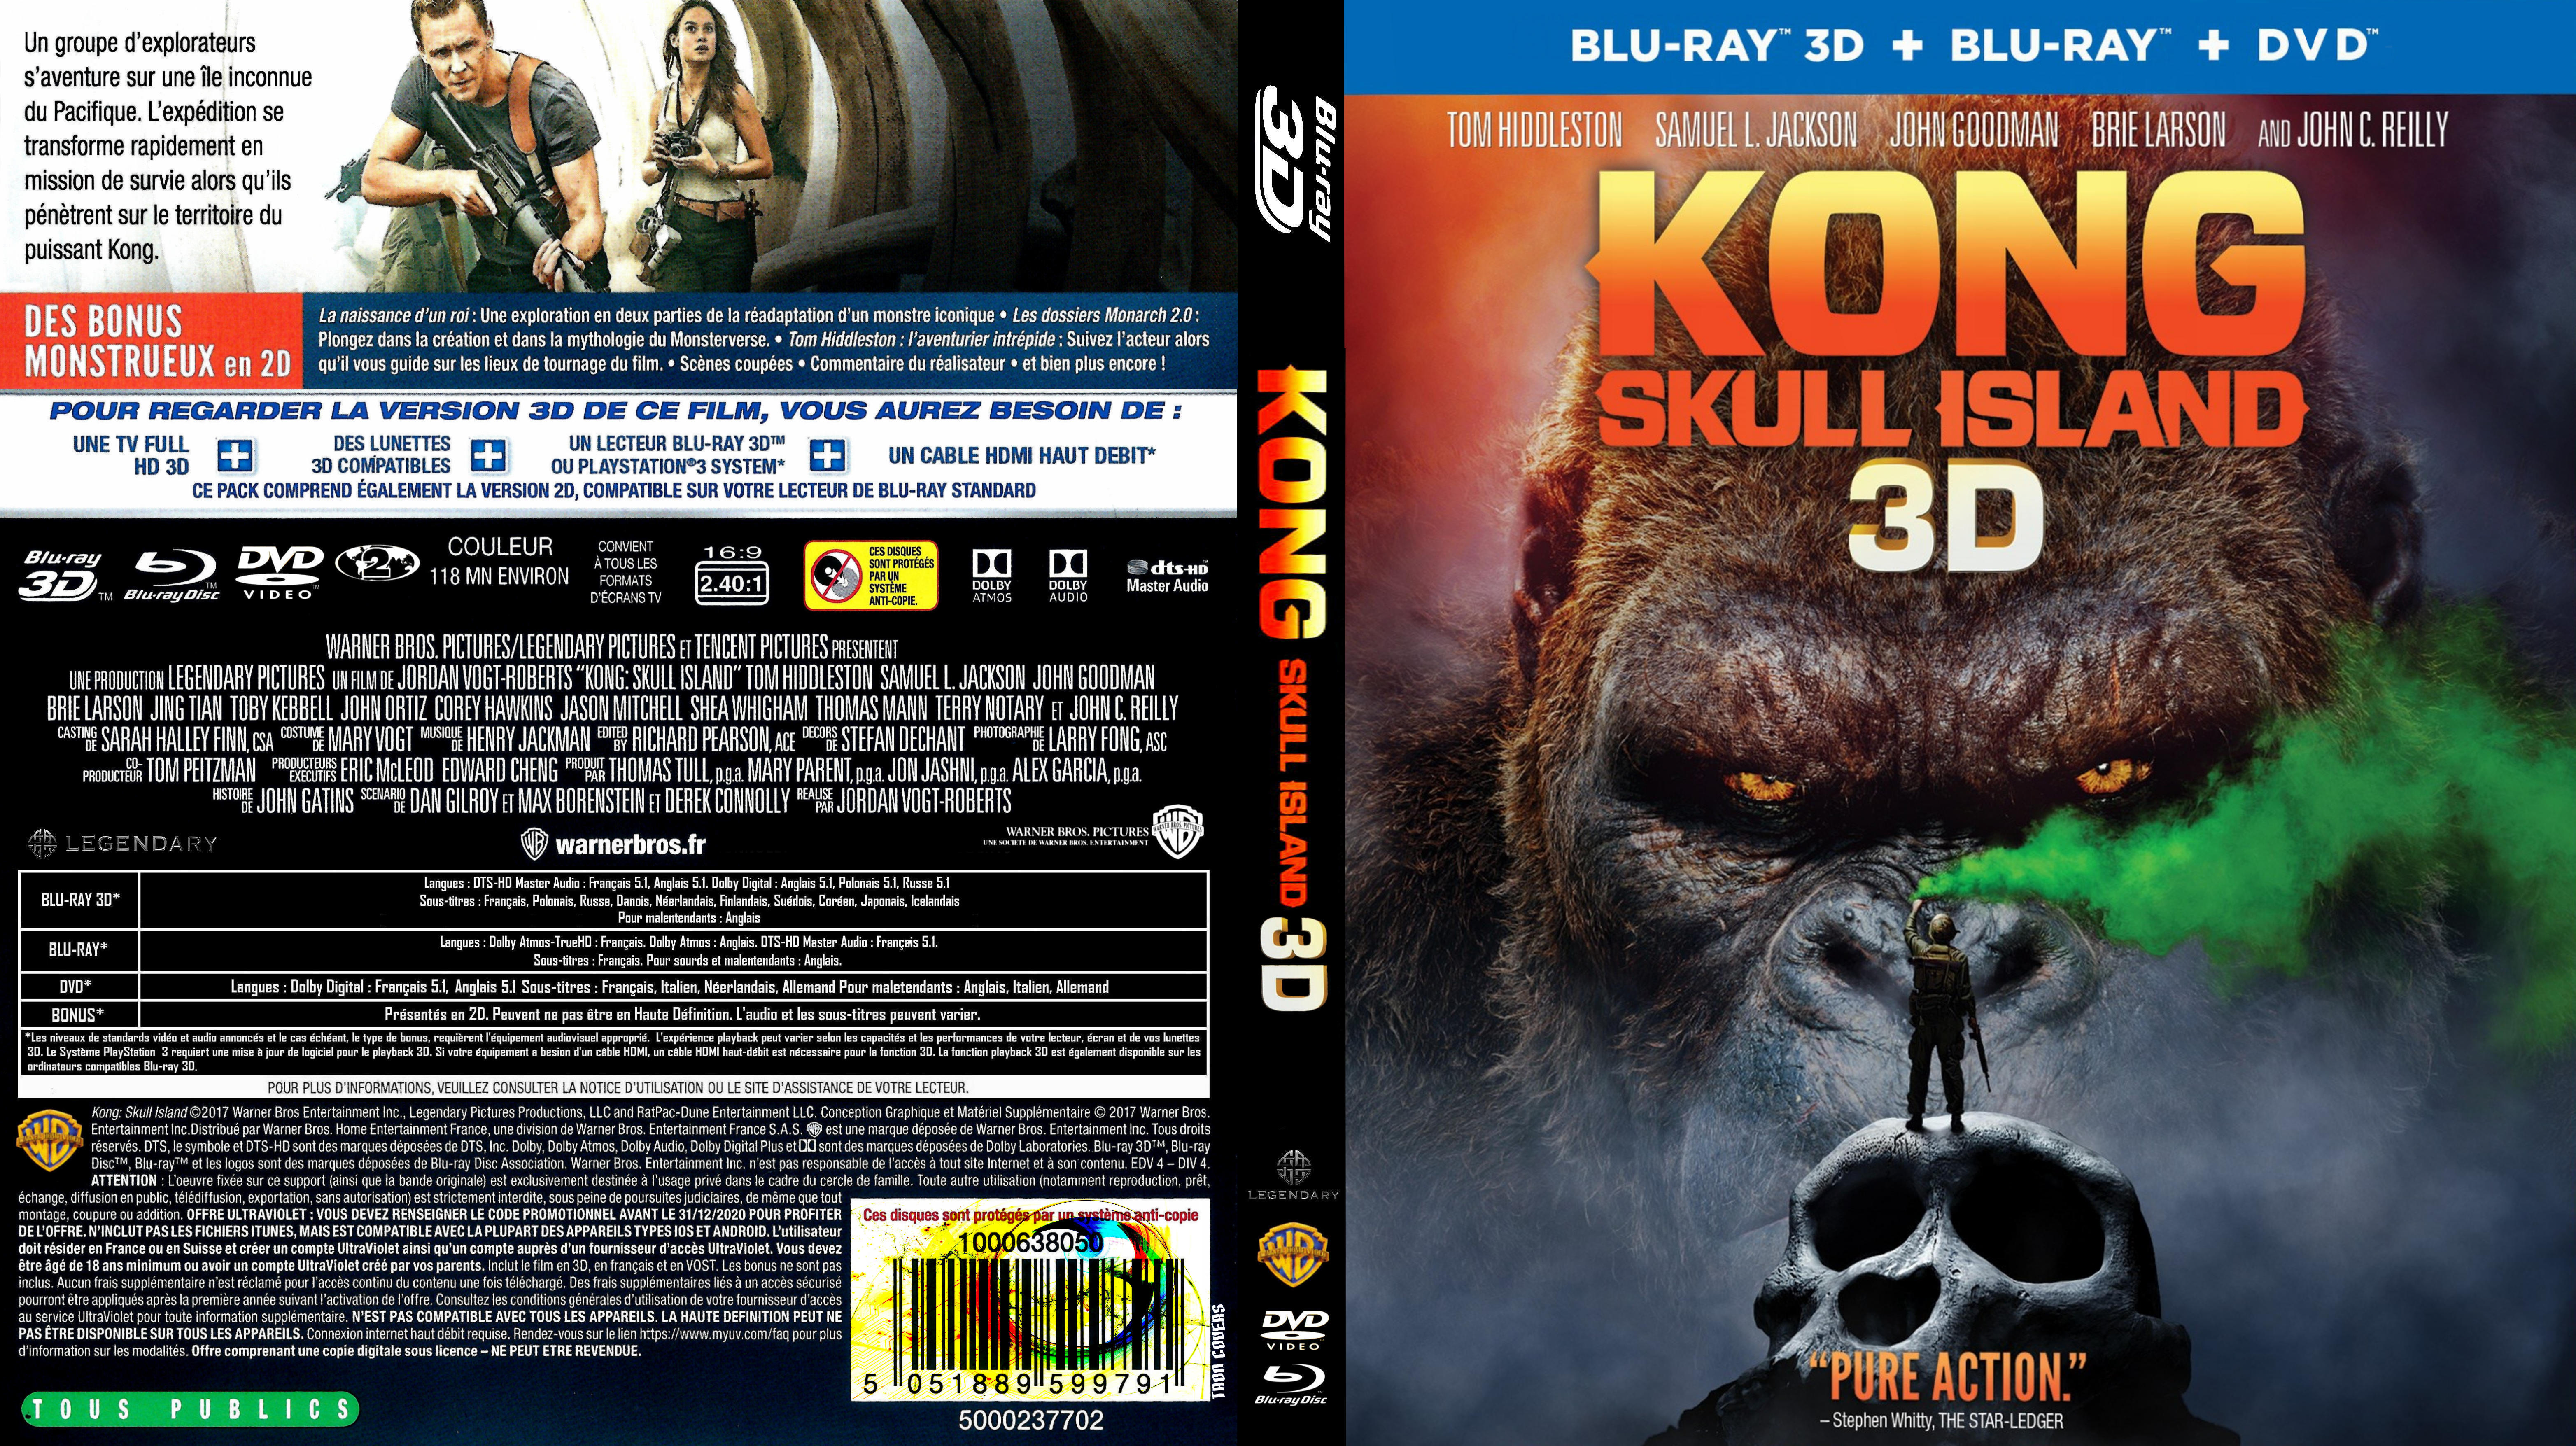 Jaquette DVD Kong Skull Island coffret 3D custom (BLU-RAY) 